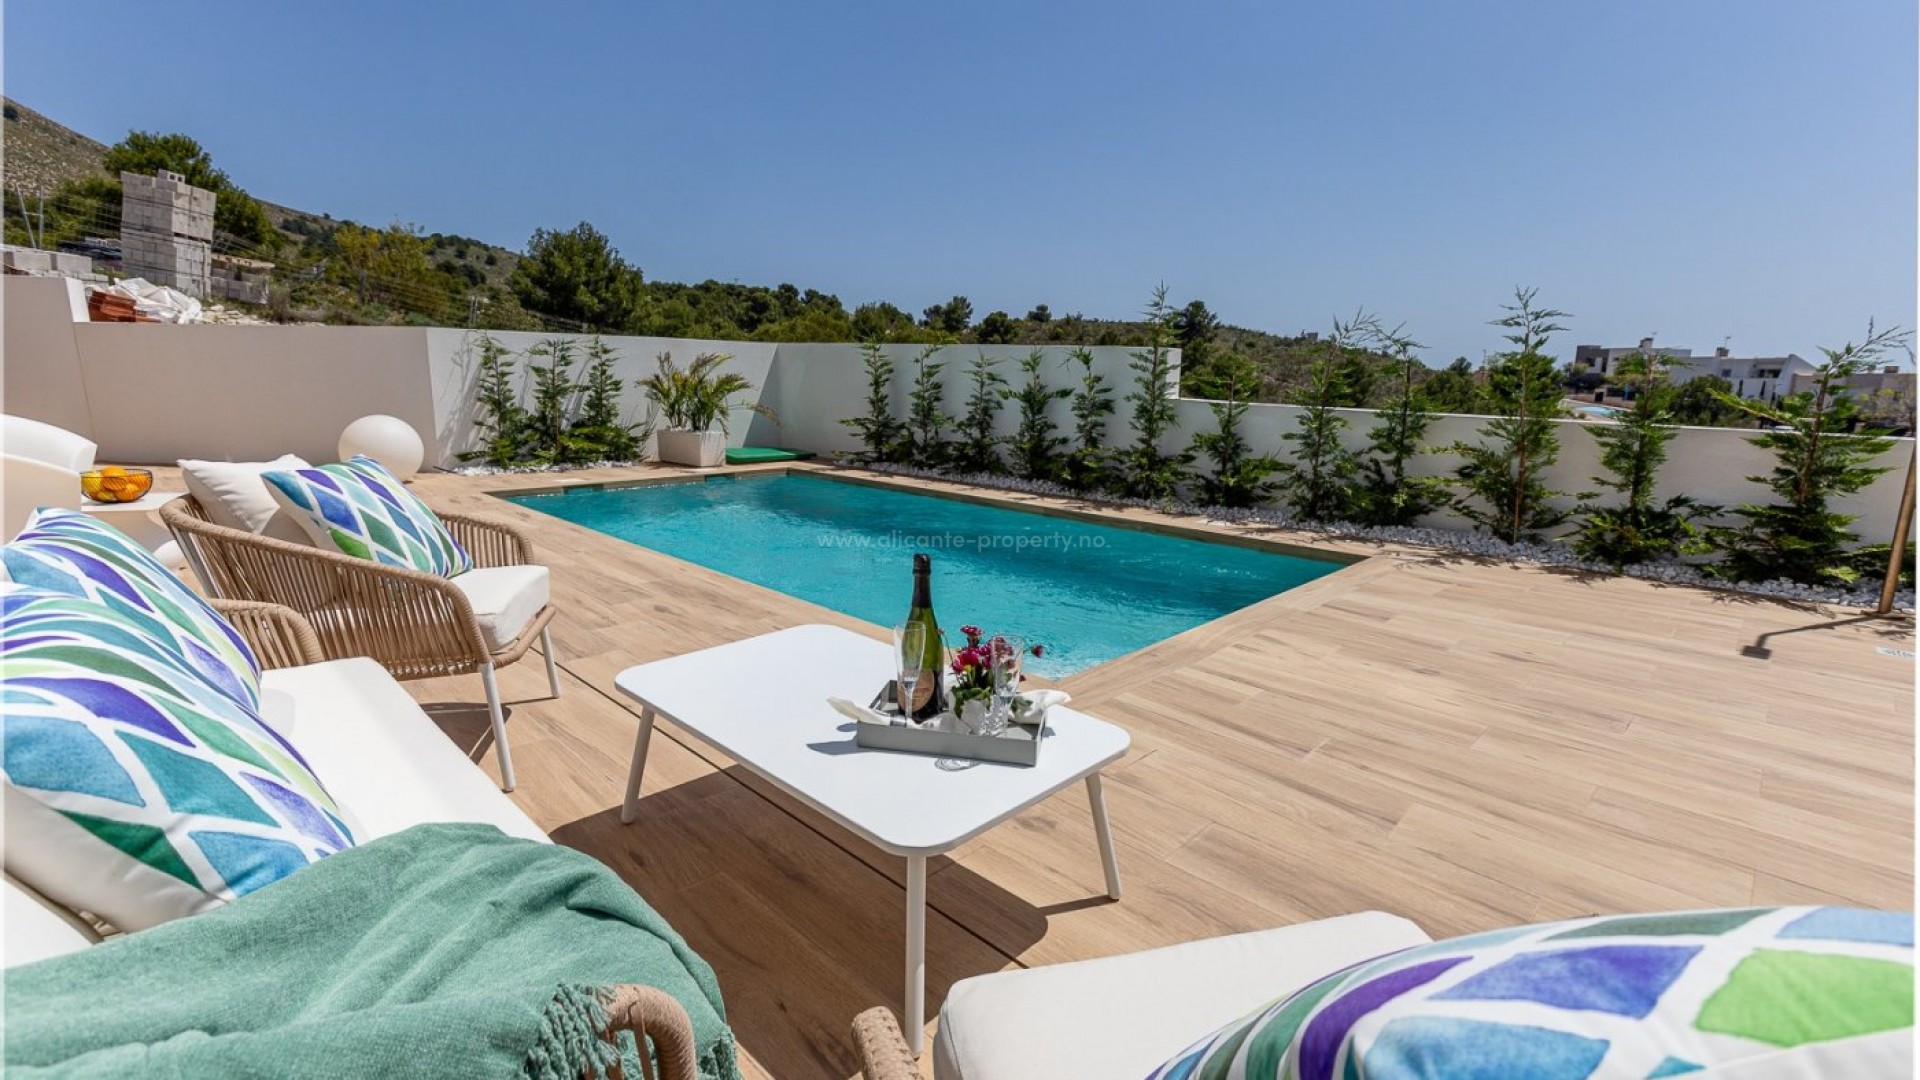 Brand new villas in Balcon de Finestrat, 3 bedrooms, 2 bathrooms, beautiful terrace and private garden with pool, 10 min to Benidorm